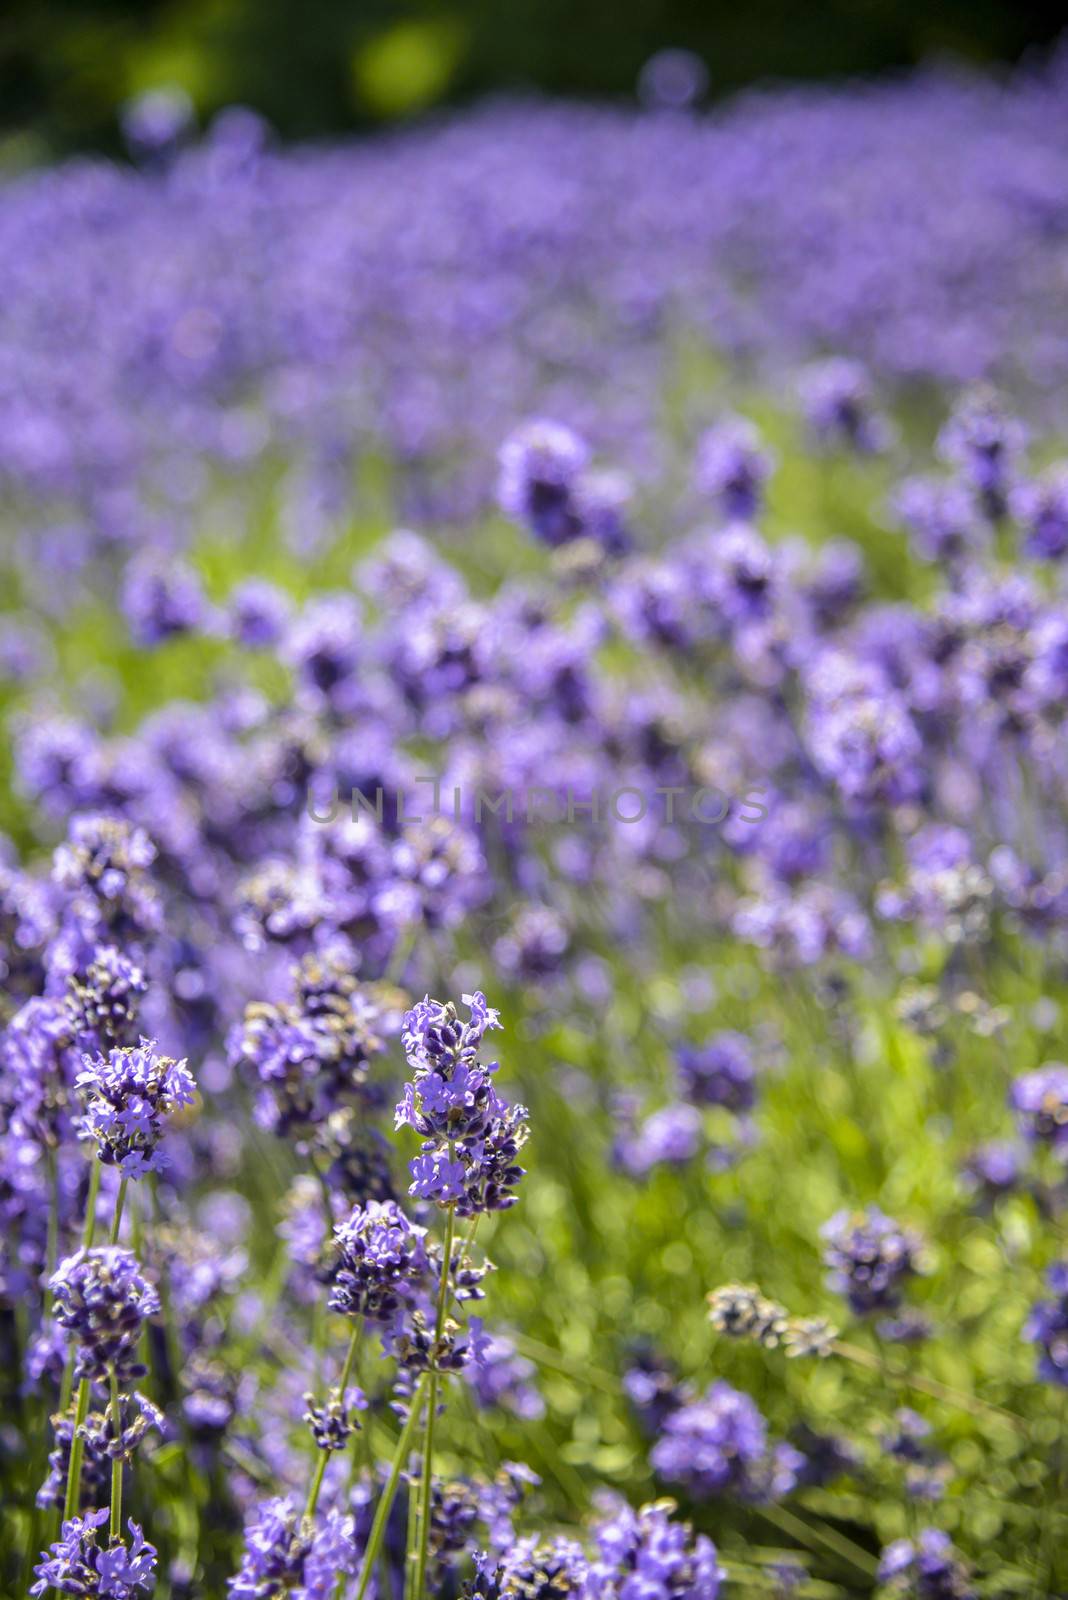 Plenty Lavender in the field4